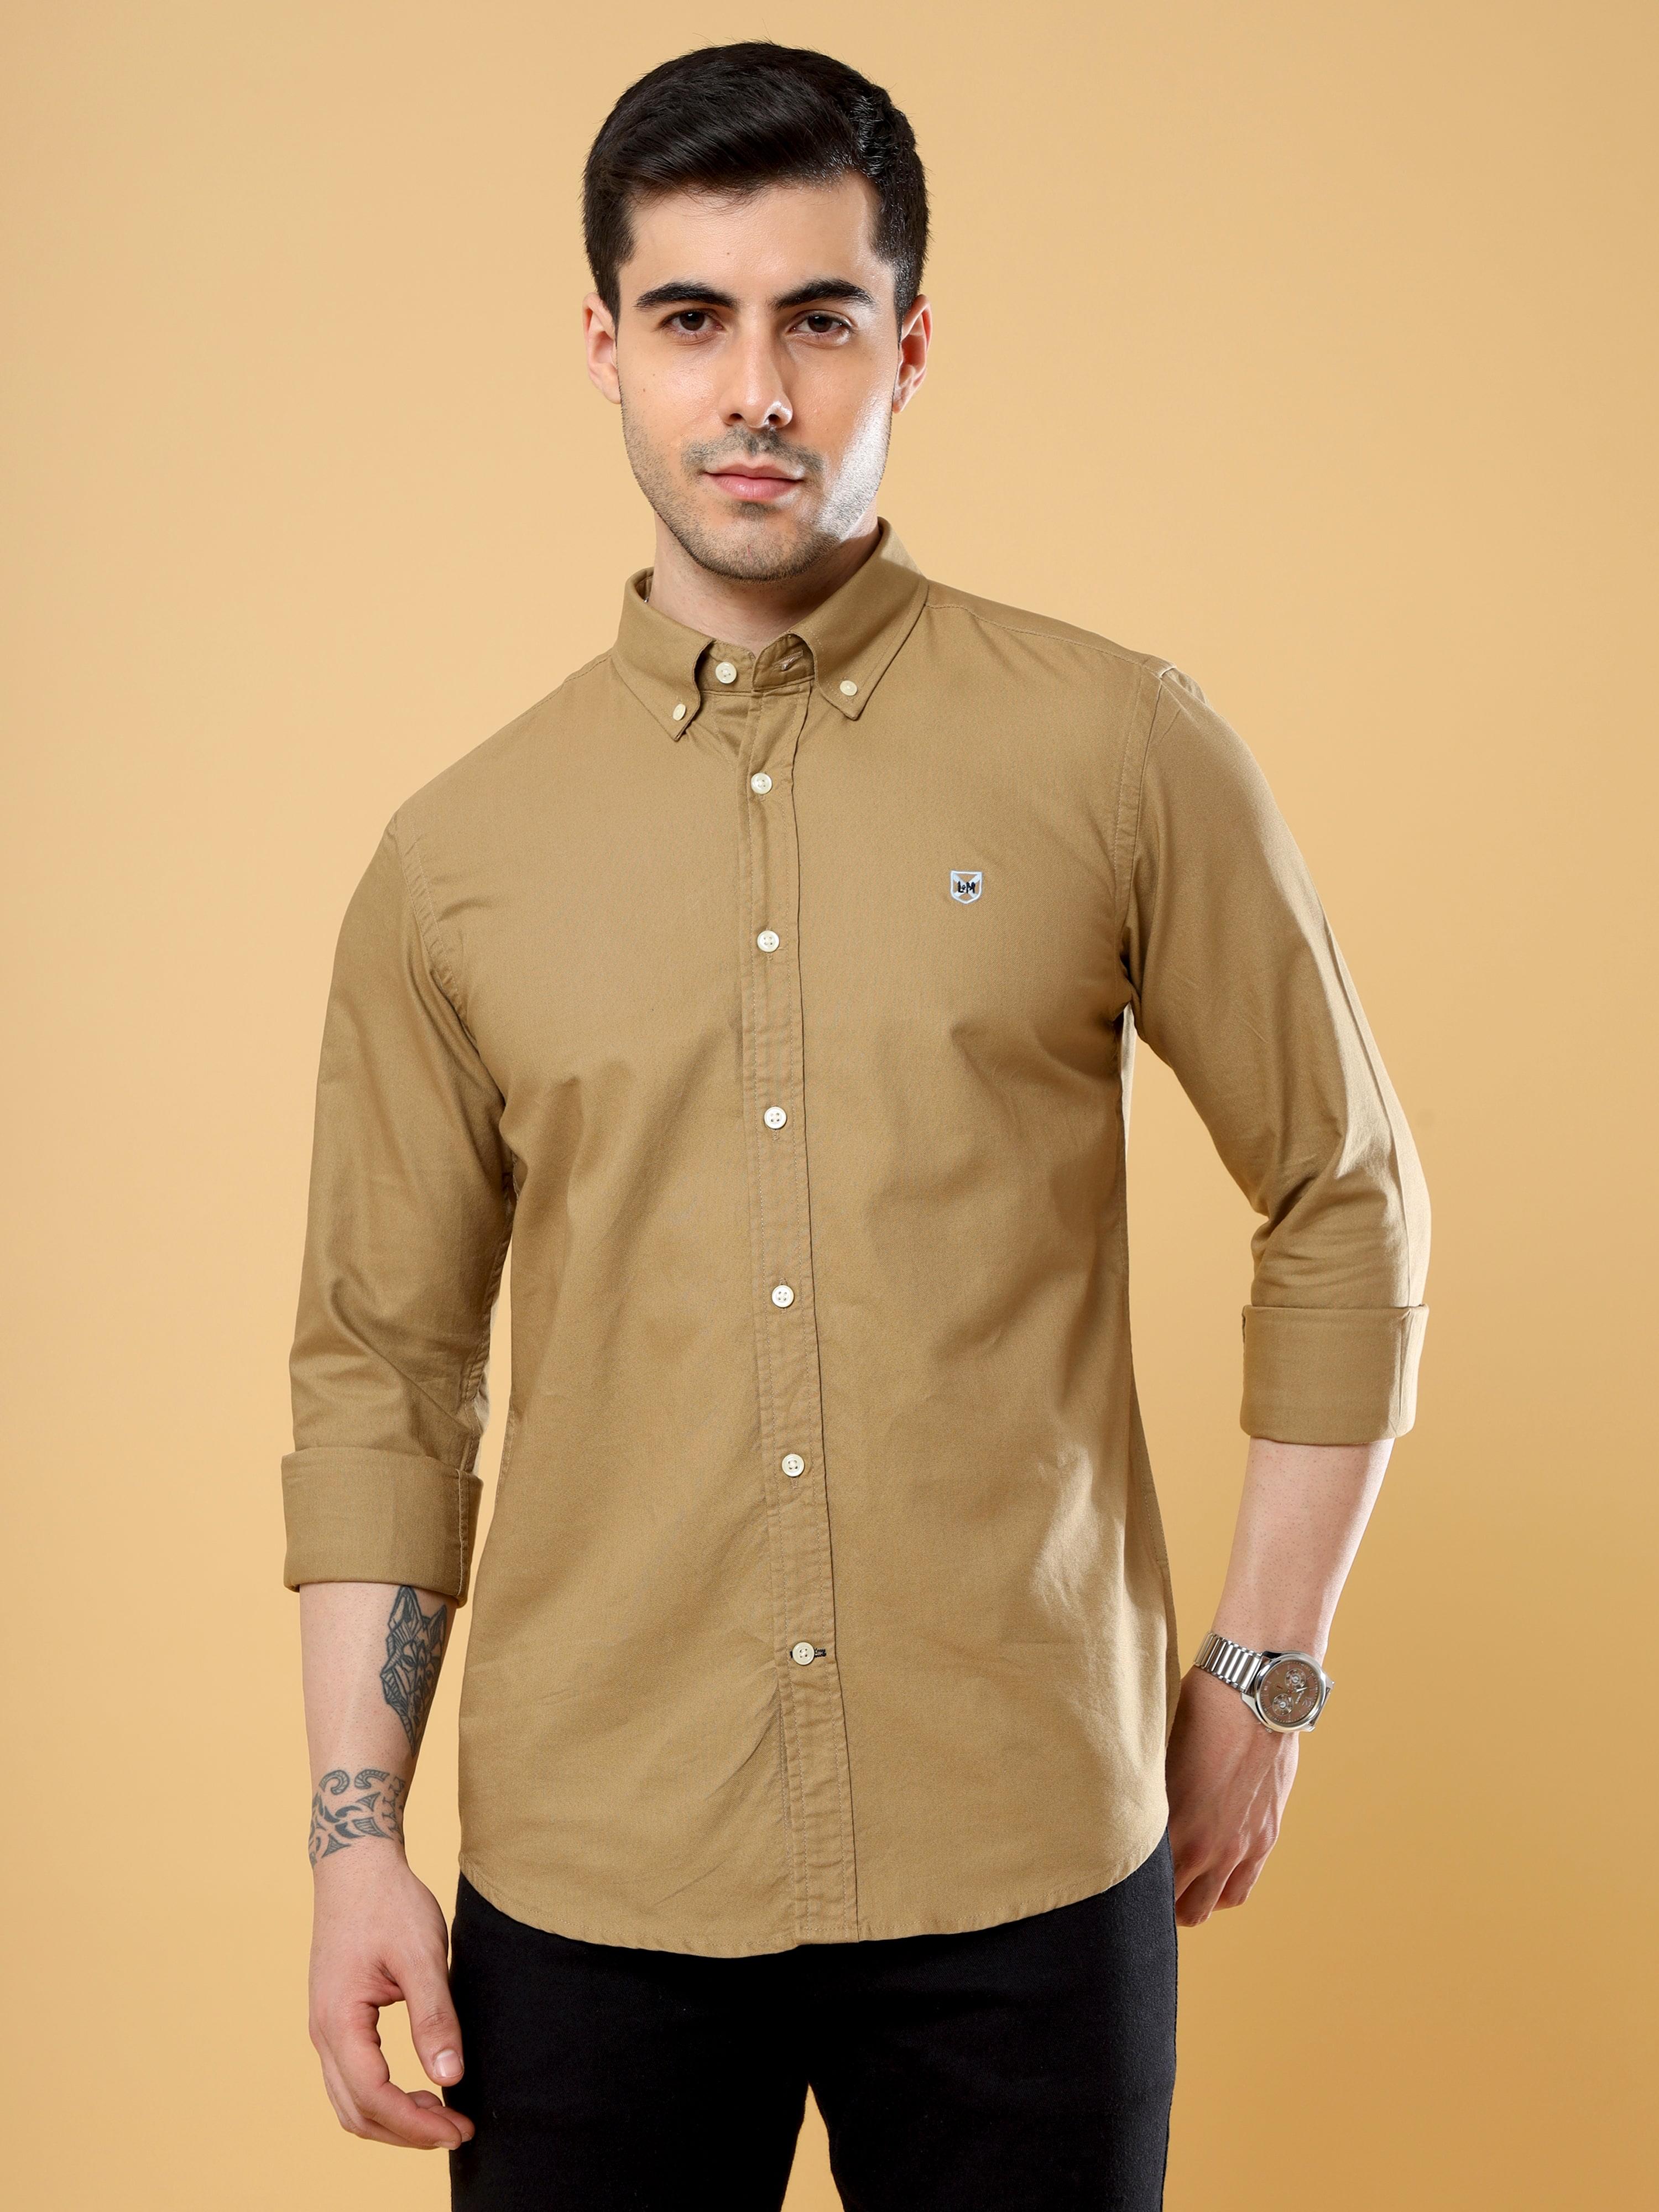 Khaki Oxford solid Button down Shirt | Khaki Shirt MensRs. 699.00